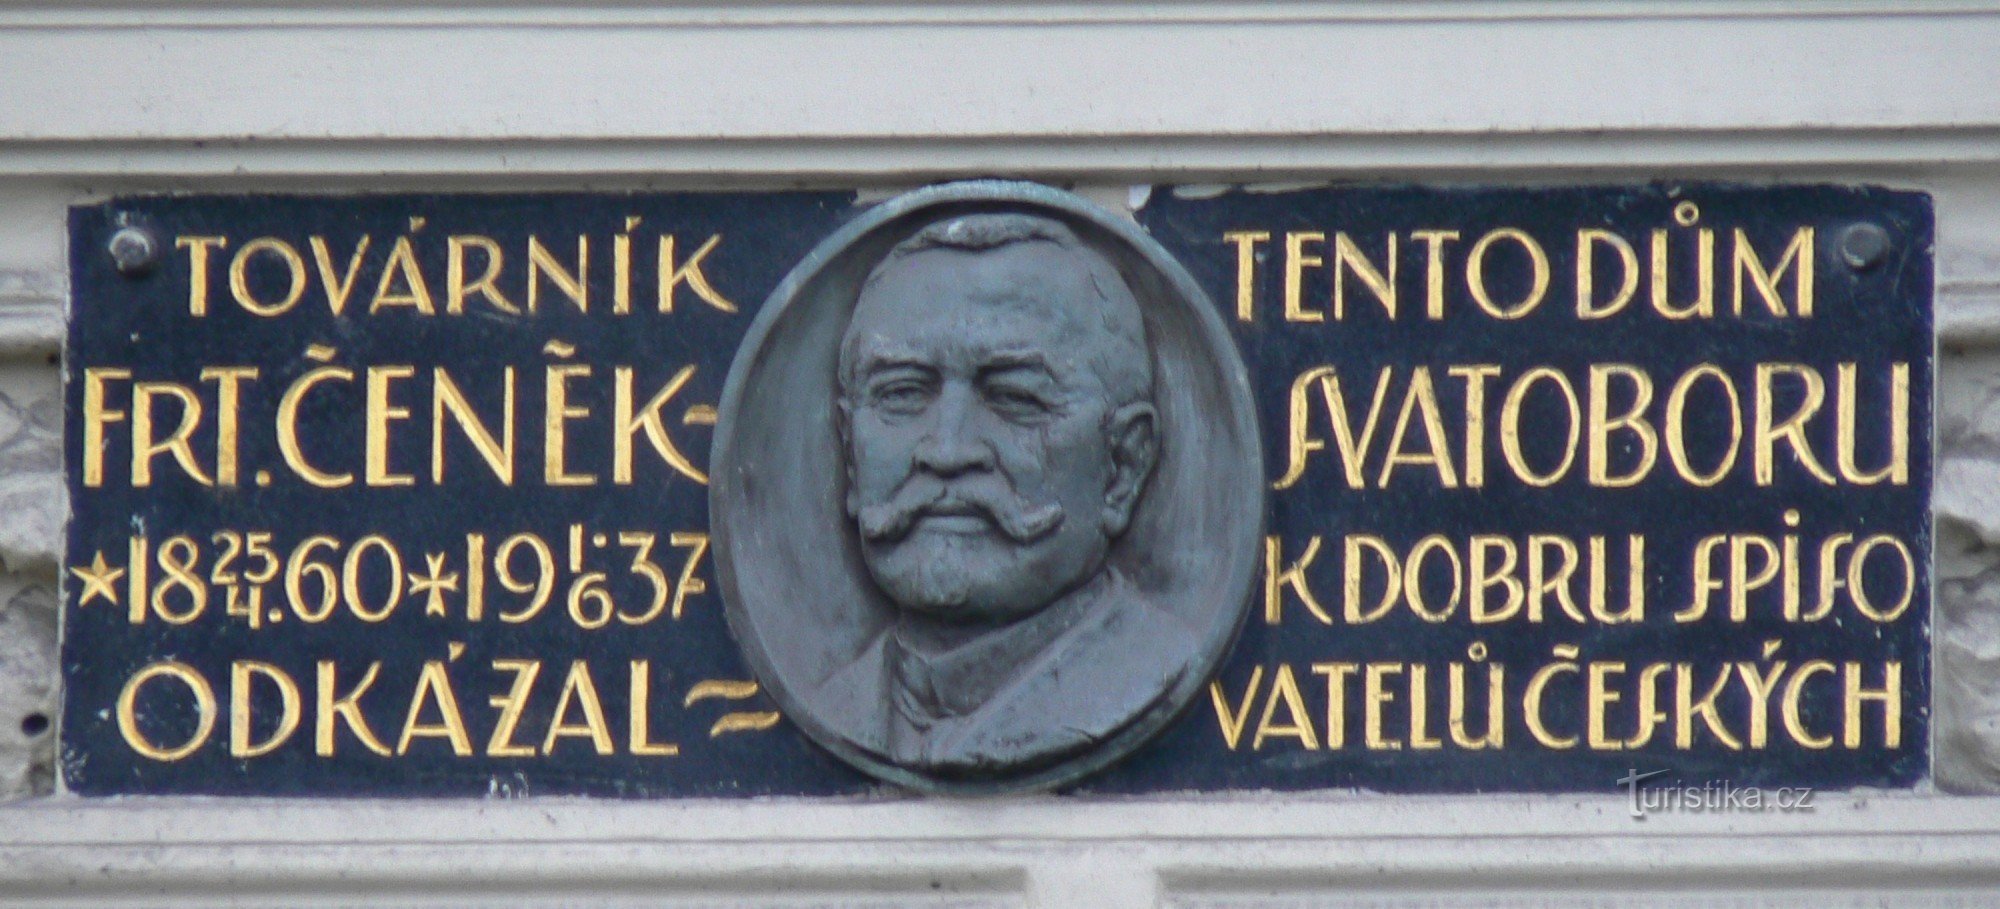 Targa commemorativa di František Čeněk